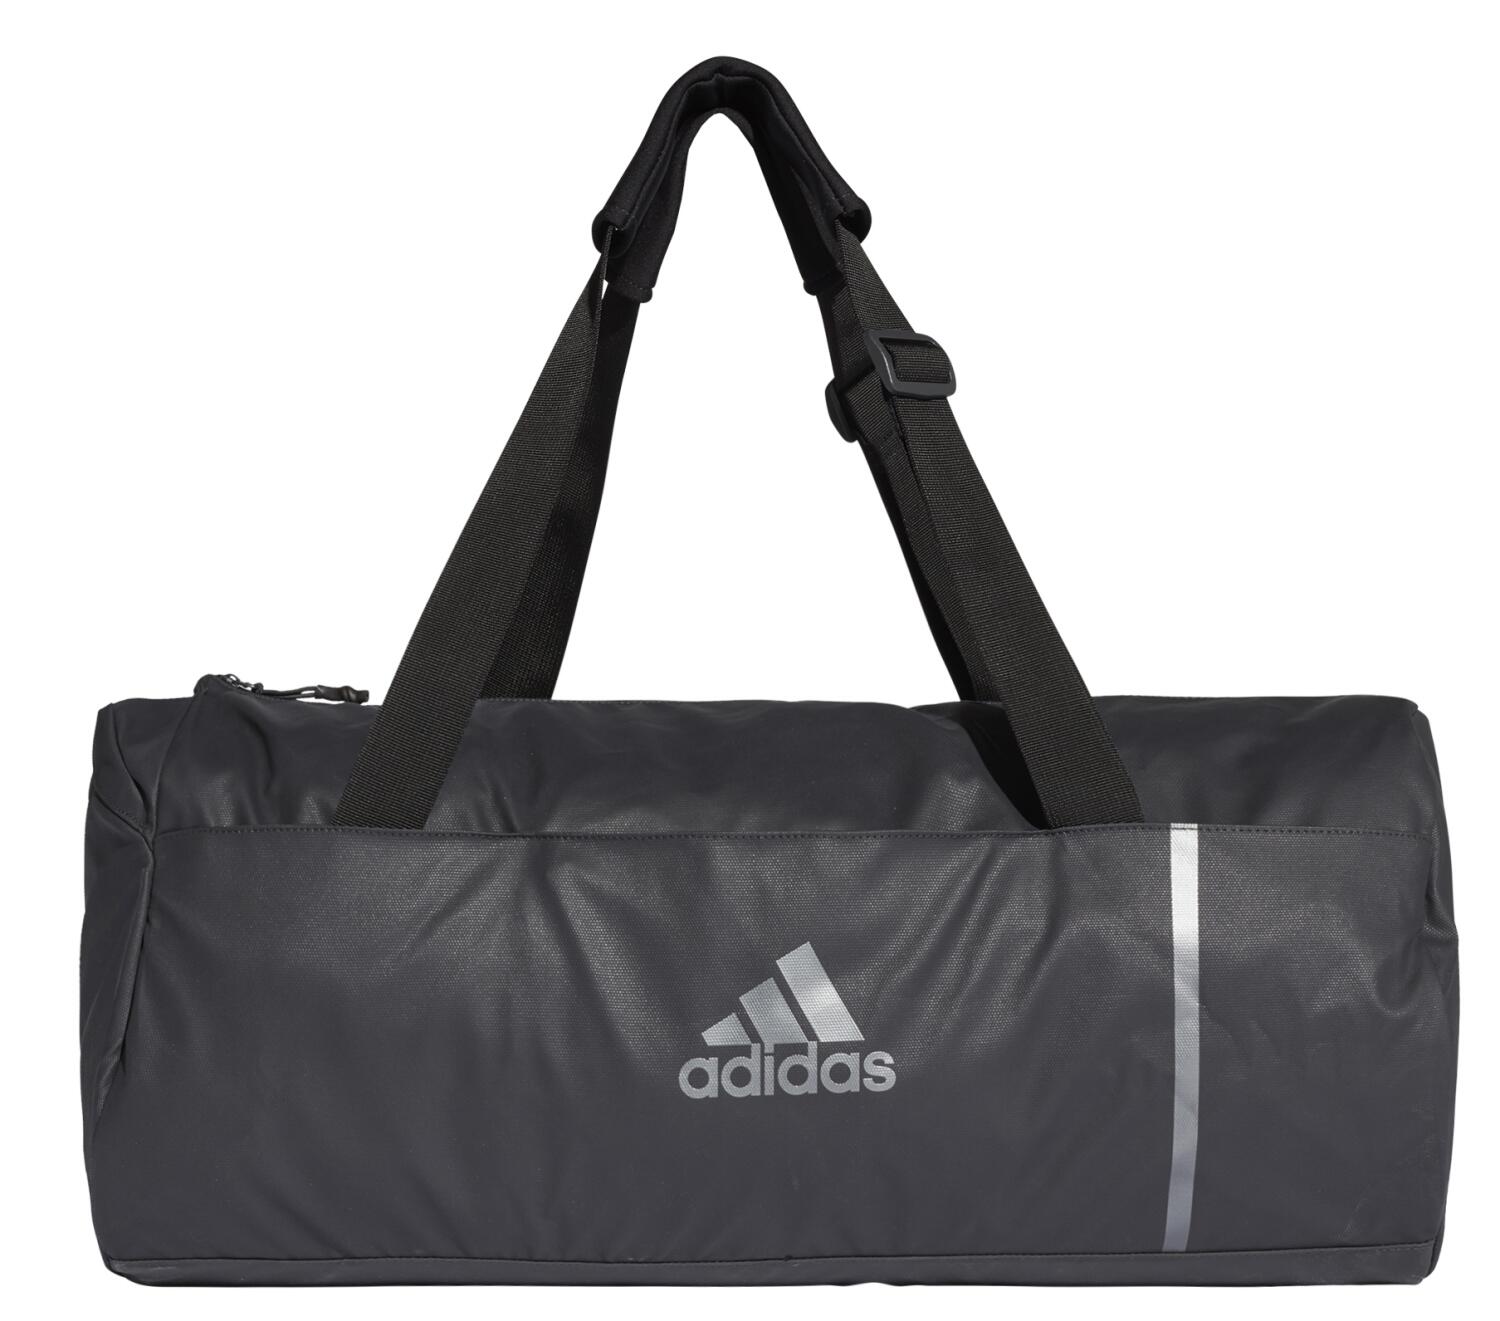 adidas Convertible Training Duffelbag M Tasche (carbon/night metallic/night metallic) von Adidas